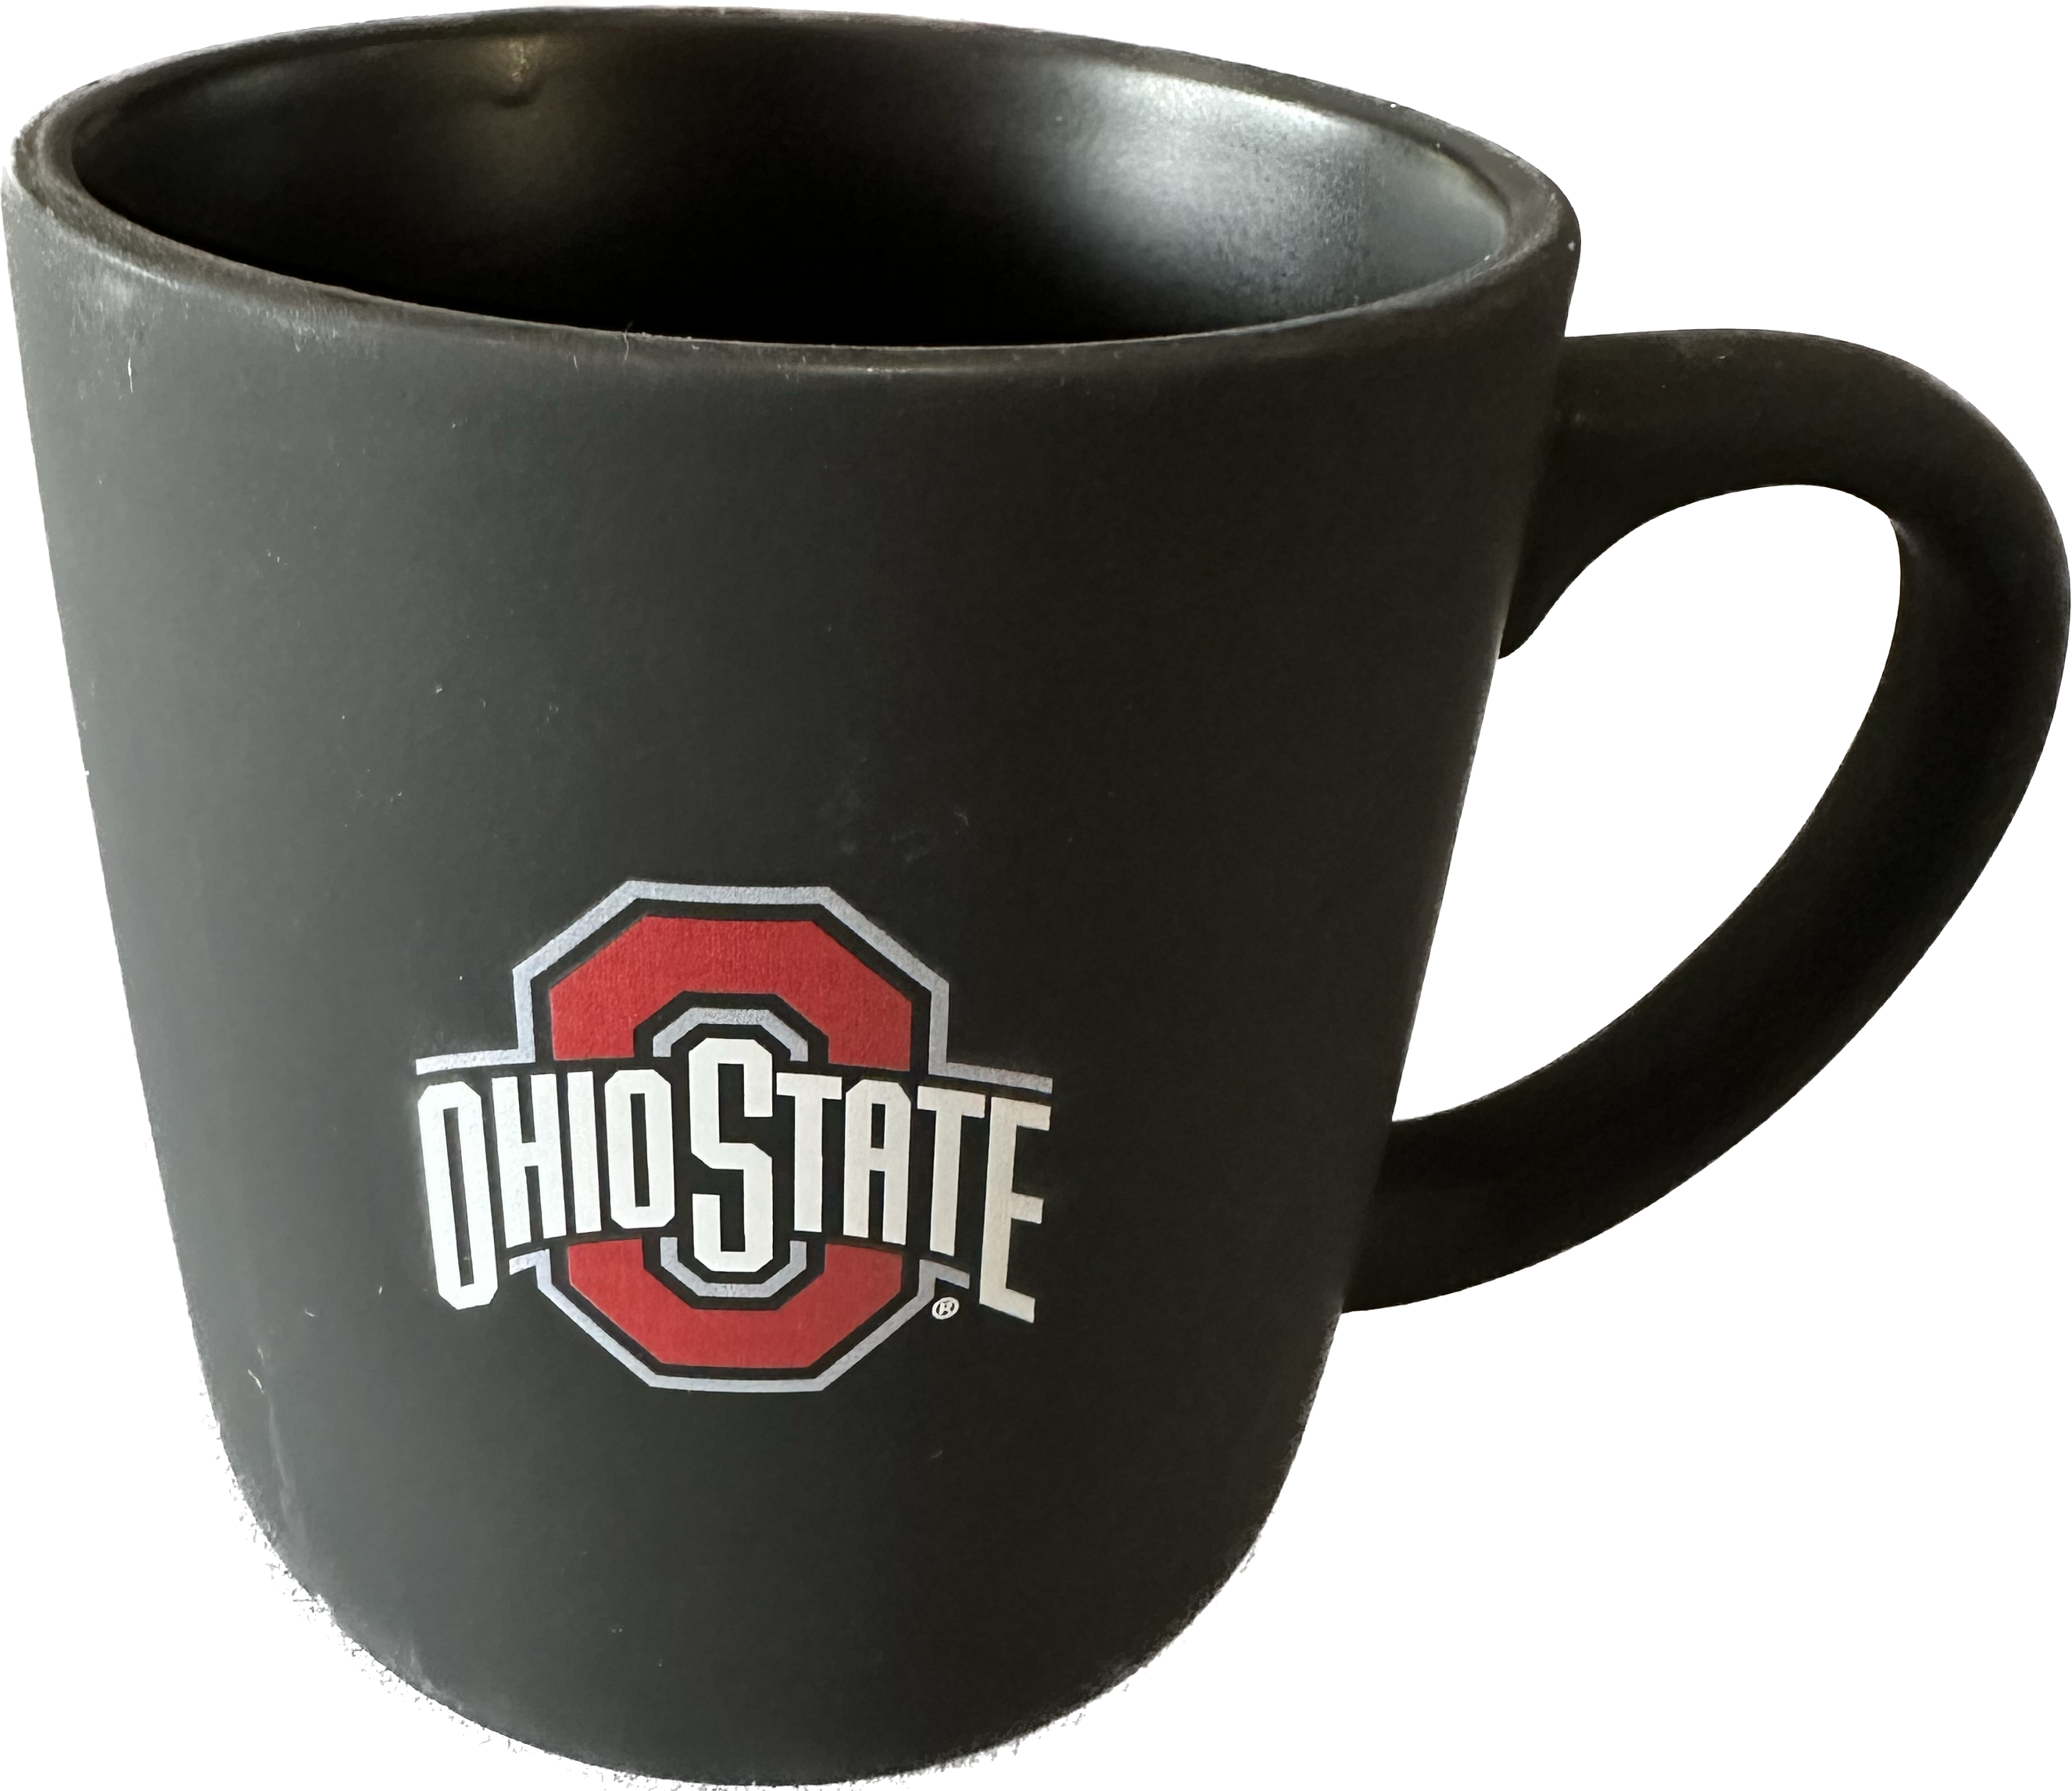 Ohio State Buckeyes 14oz Red Ceramic Mug, 4th and Goal